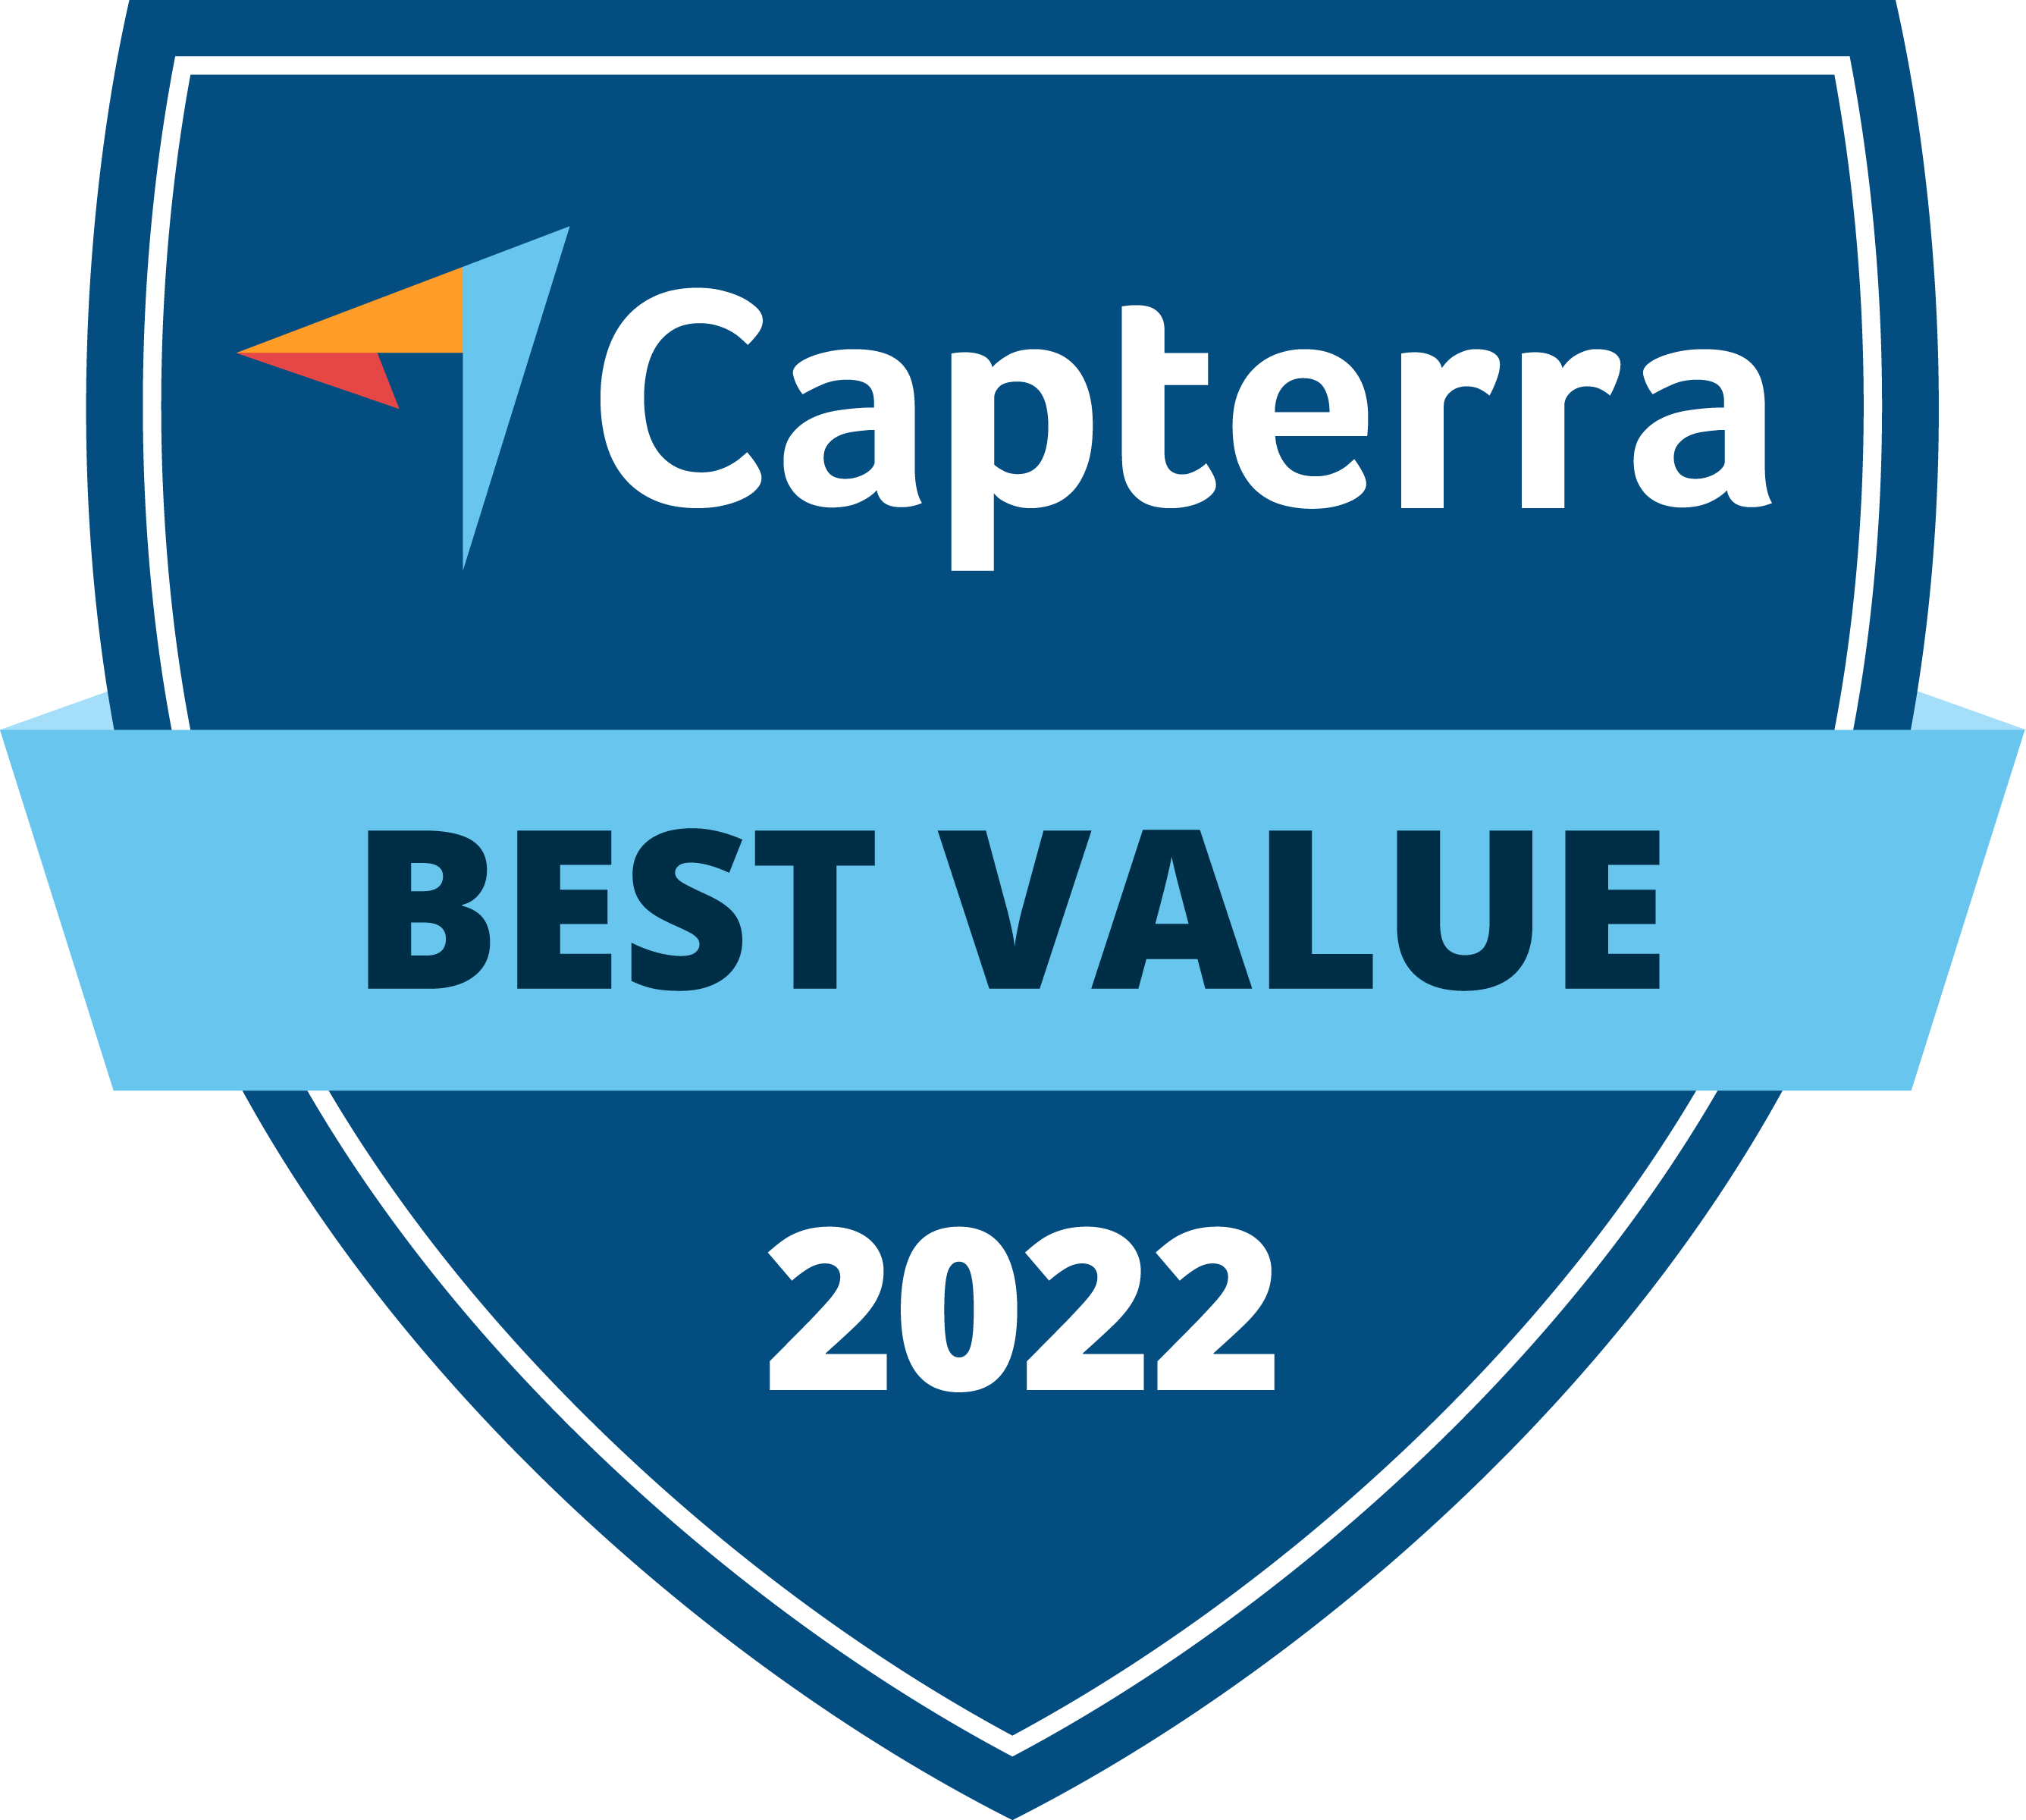 Best Value 2022